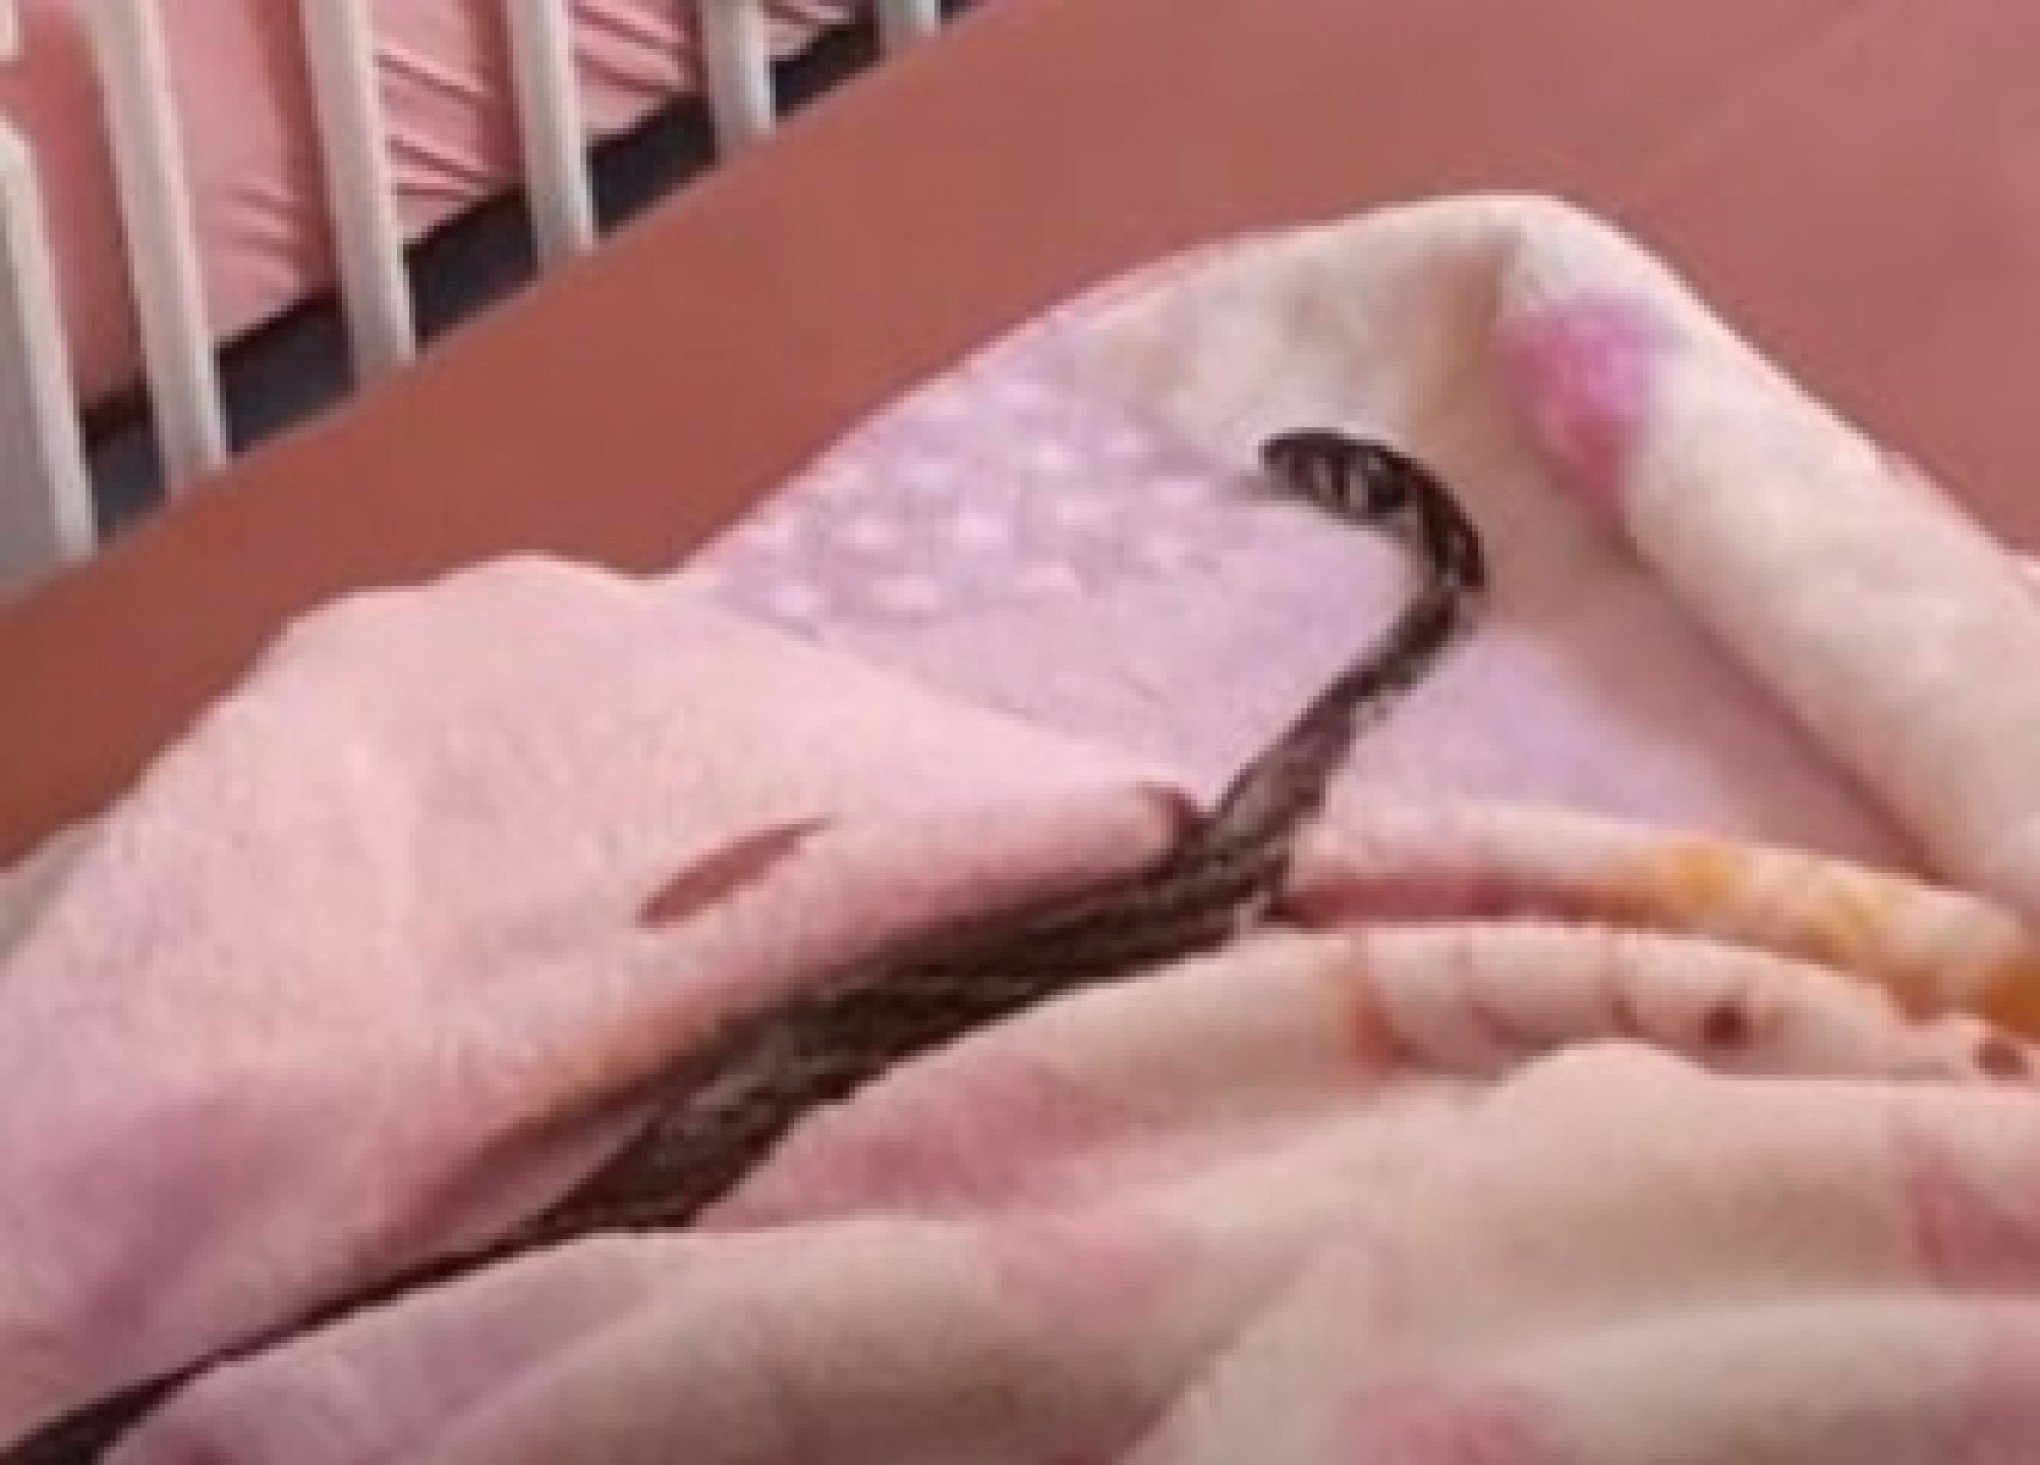 Vídeo: cobra sai de dentro de outra serpente durante resgate